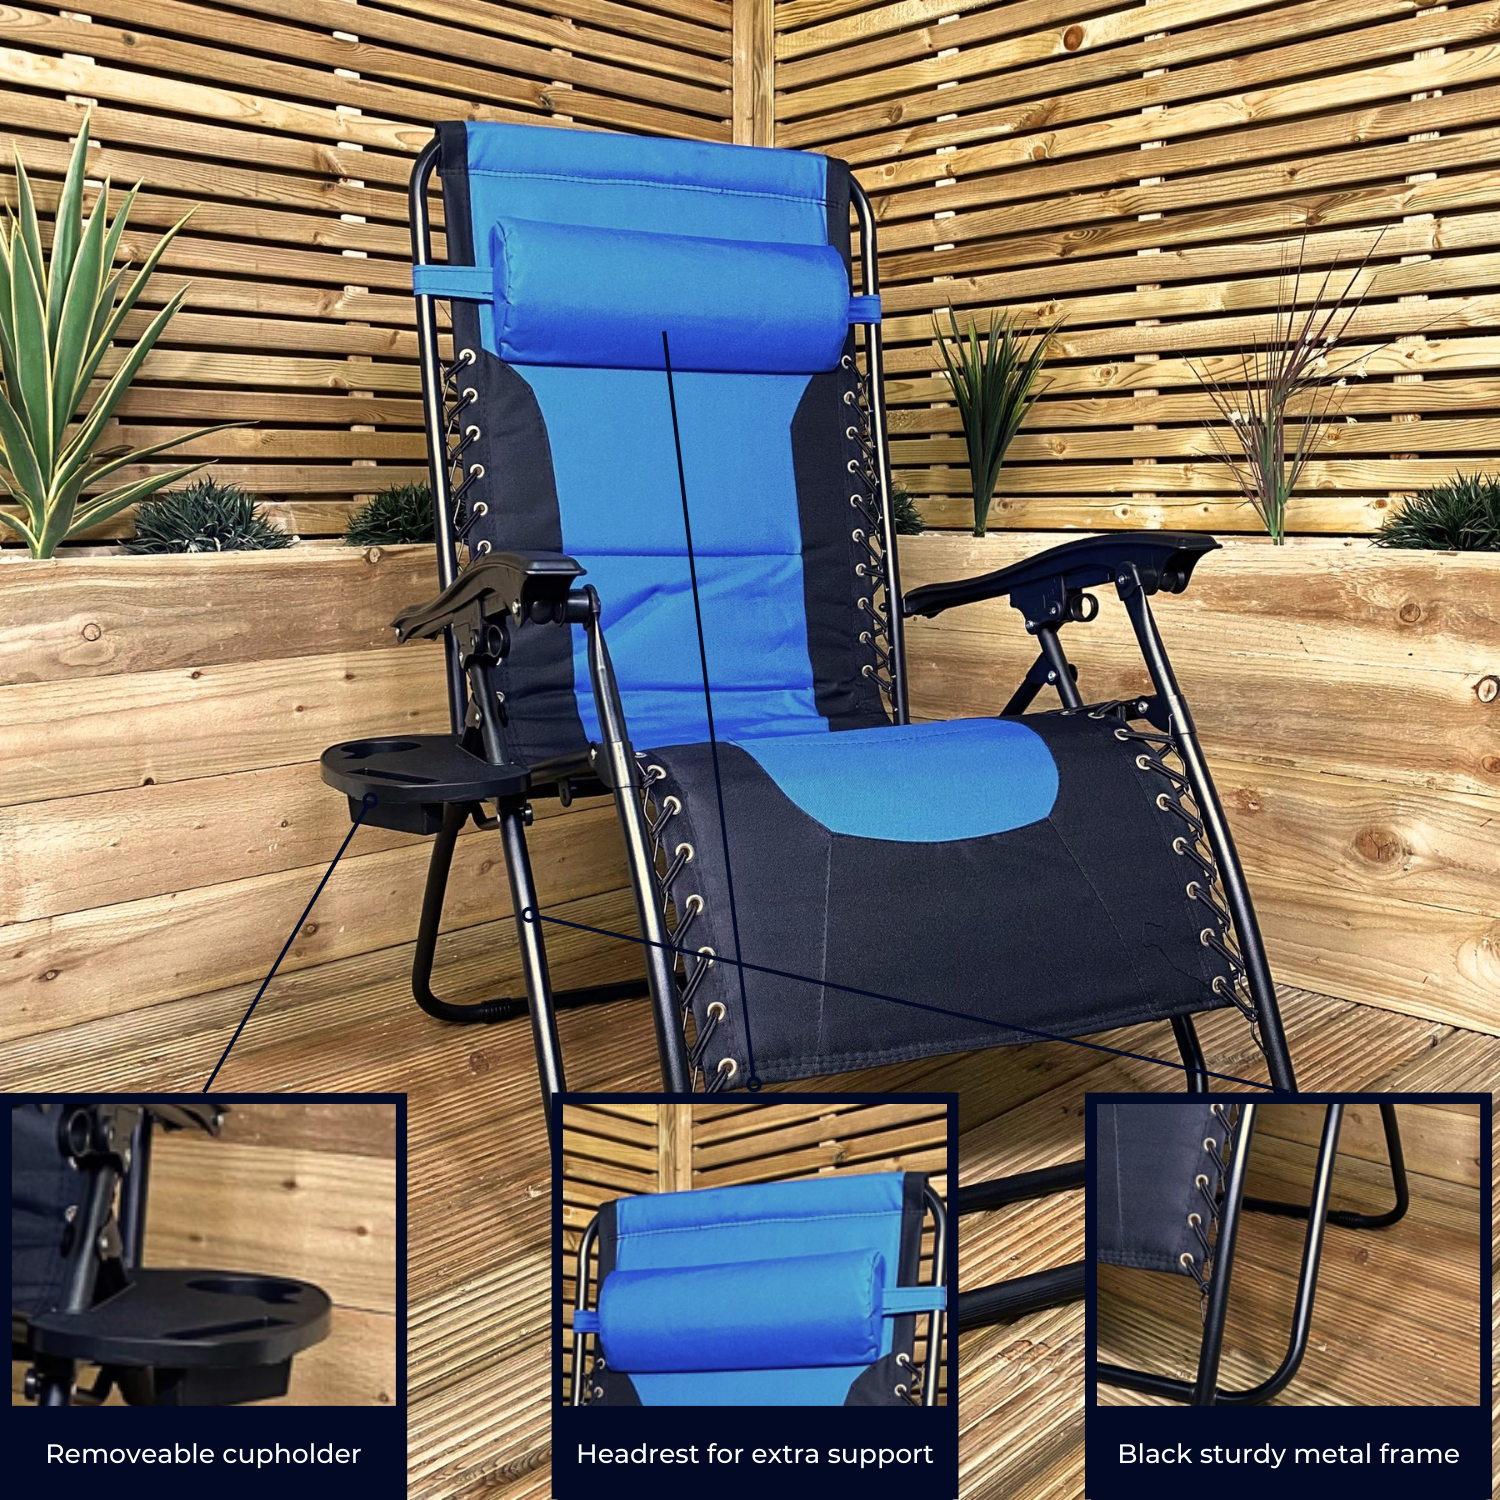 Luxury Padded Multi Position Zero Gravity Garden Relaxer Chair Lounger in Blue & Black